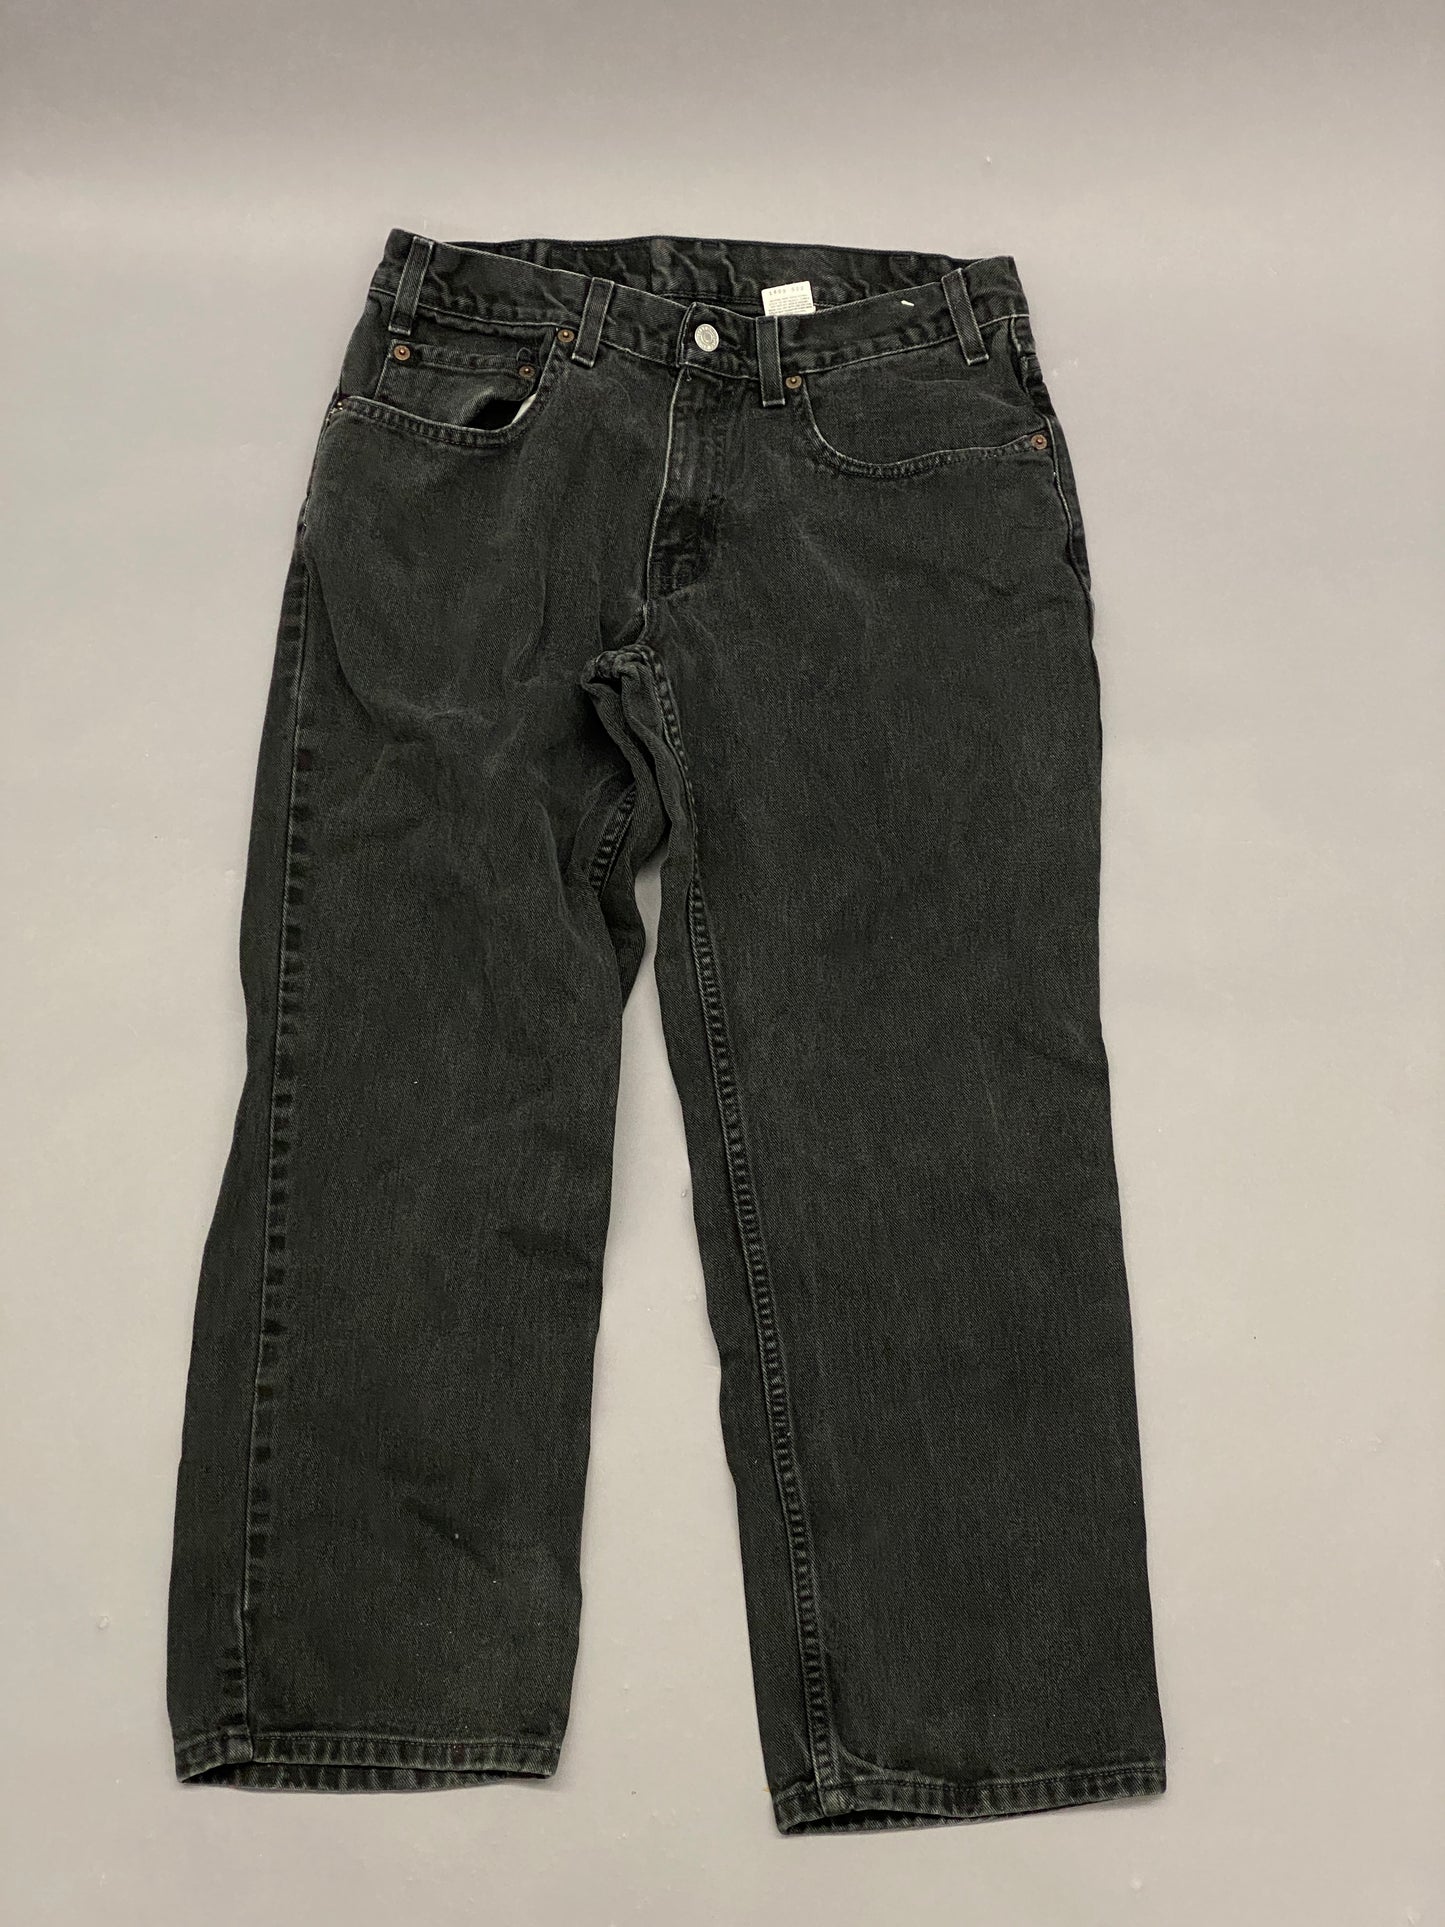 Levis 550 Husky Vintage Jeans - 33x28